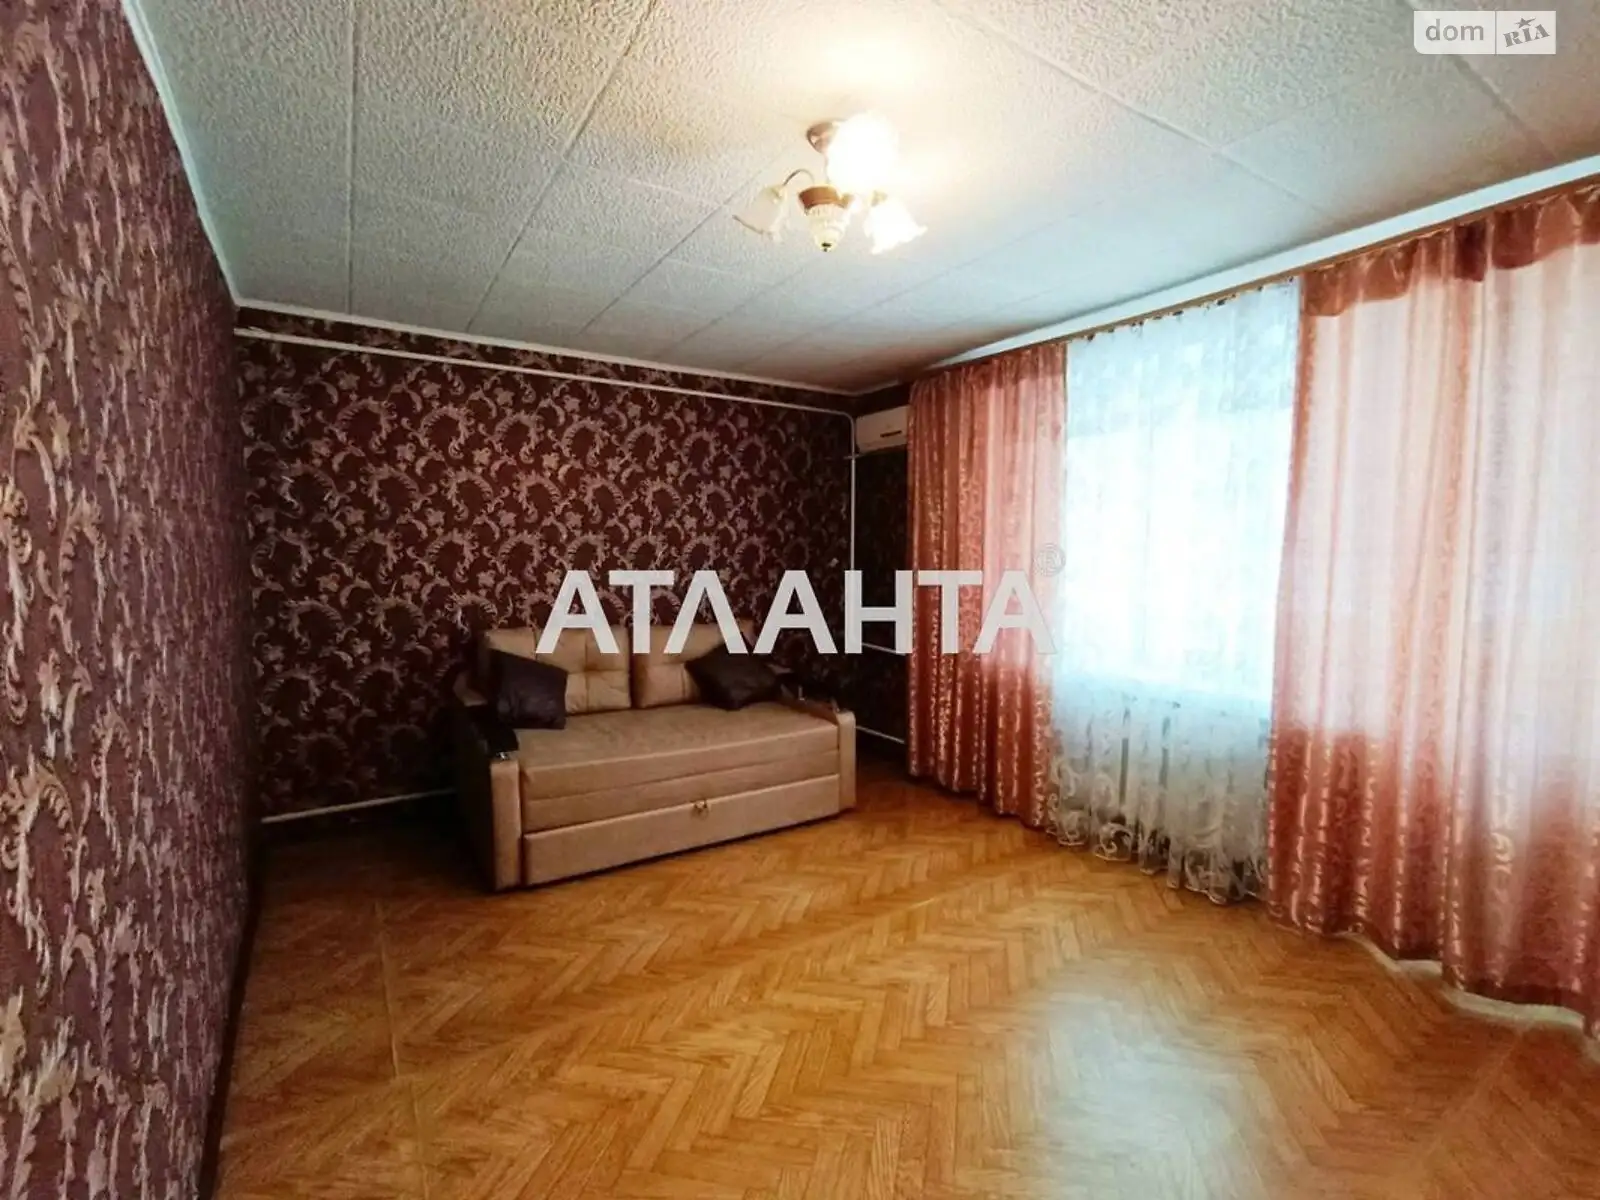 Продается 2-комнатная квартира 57.8 кв. м в Петродолинском, цена: 20000 $ - фото 1